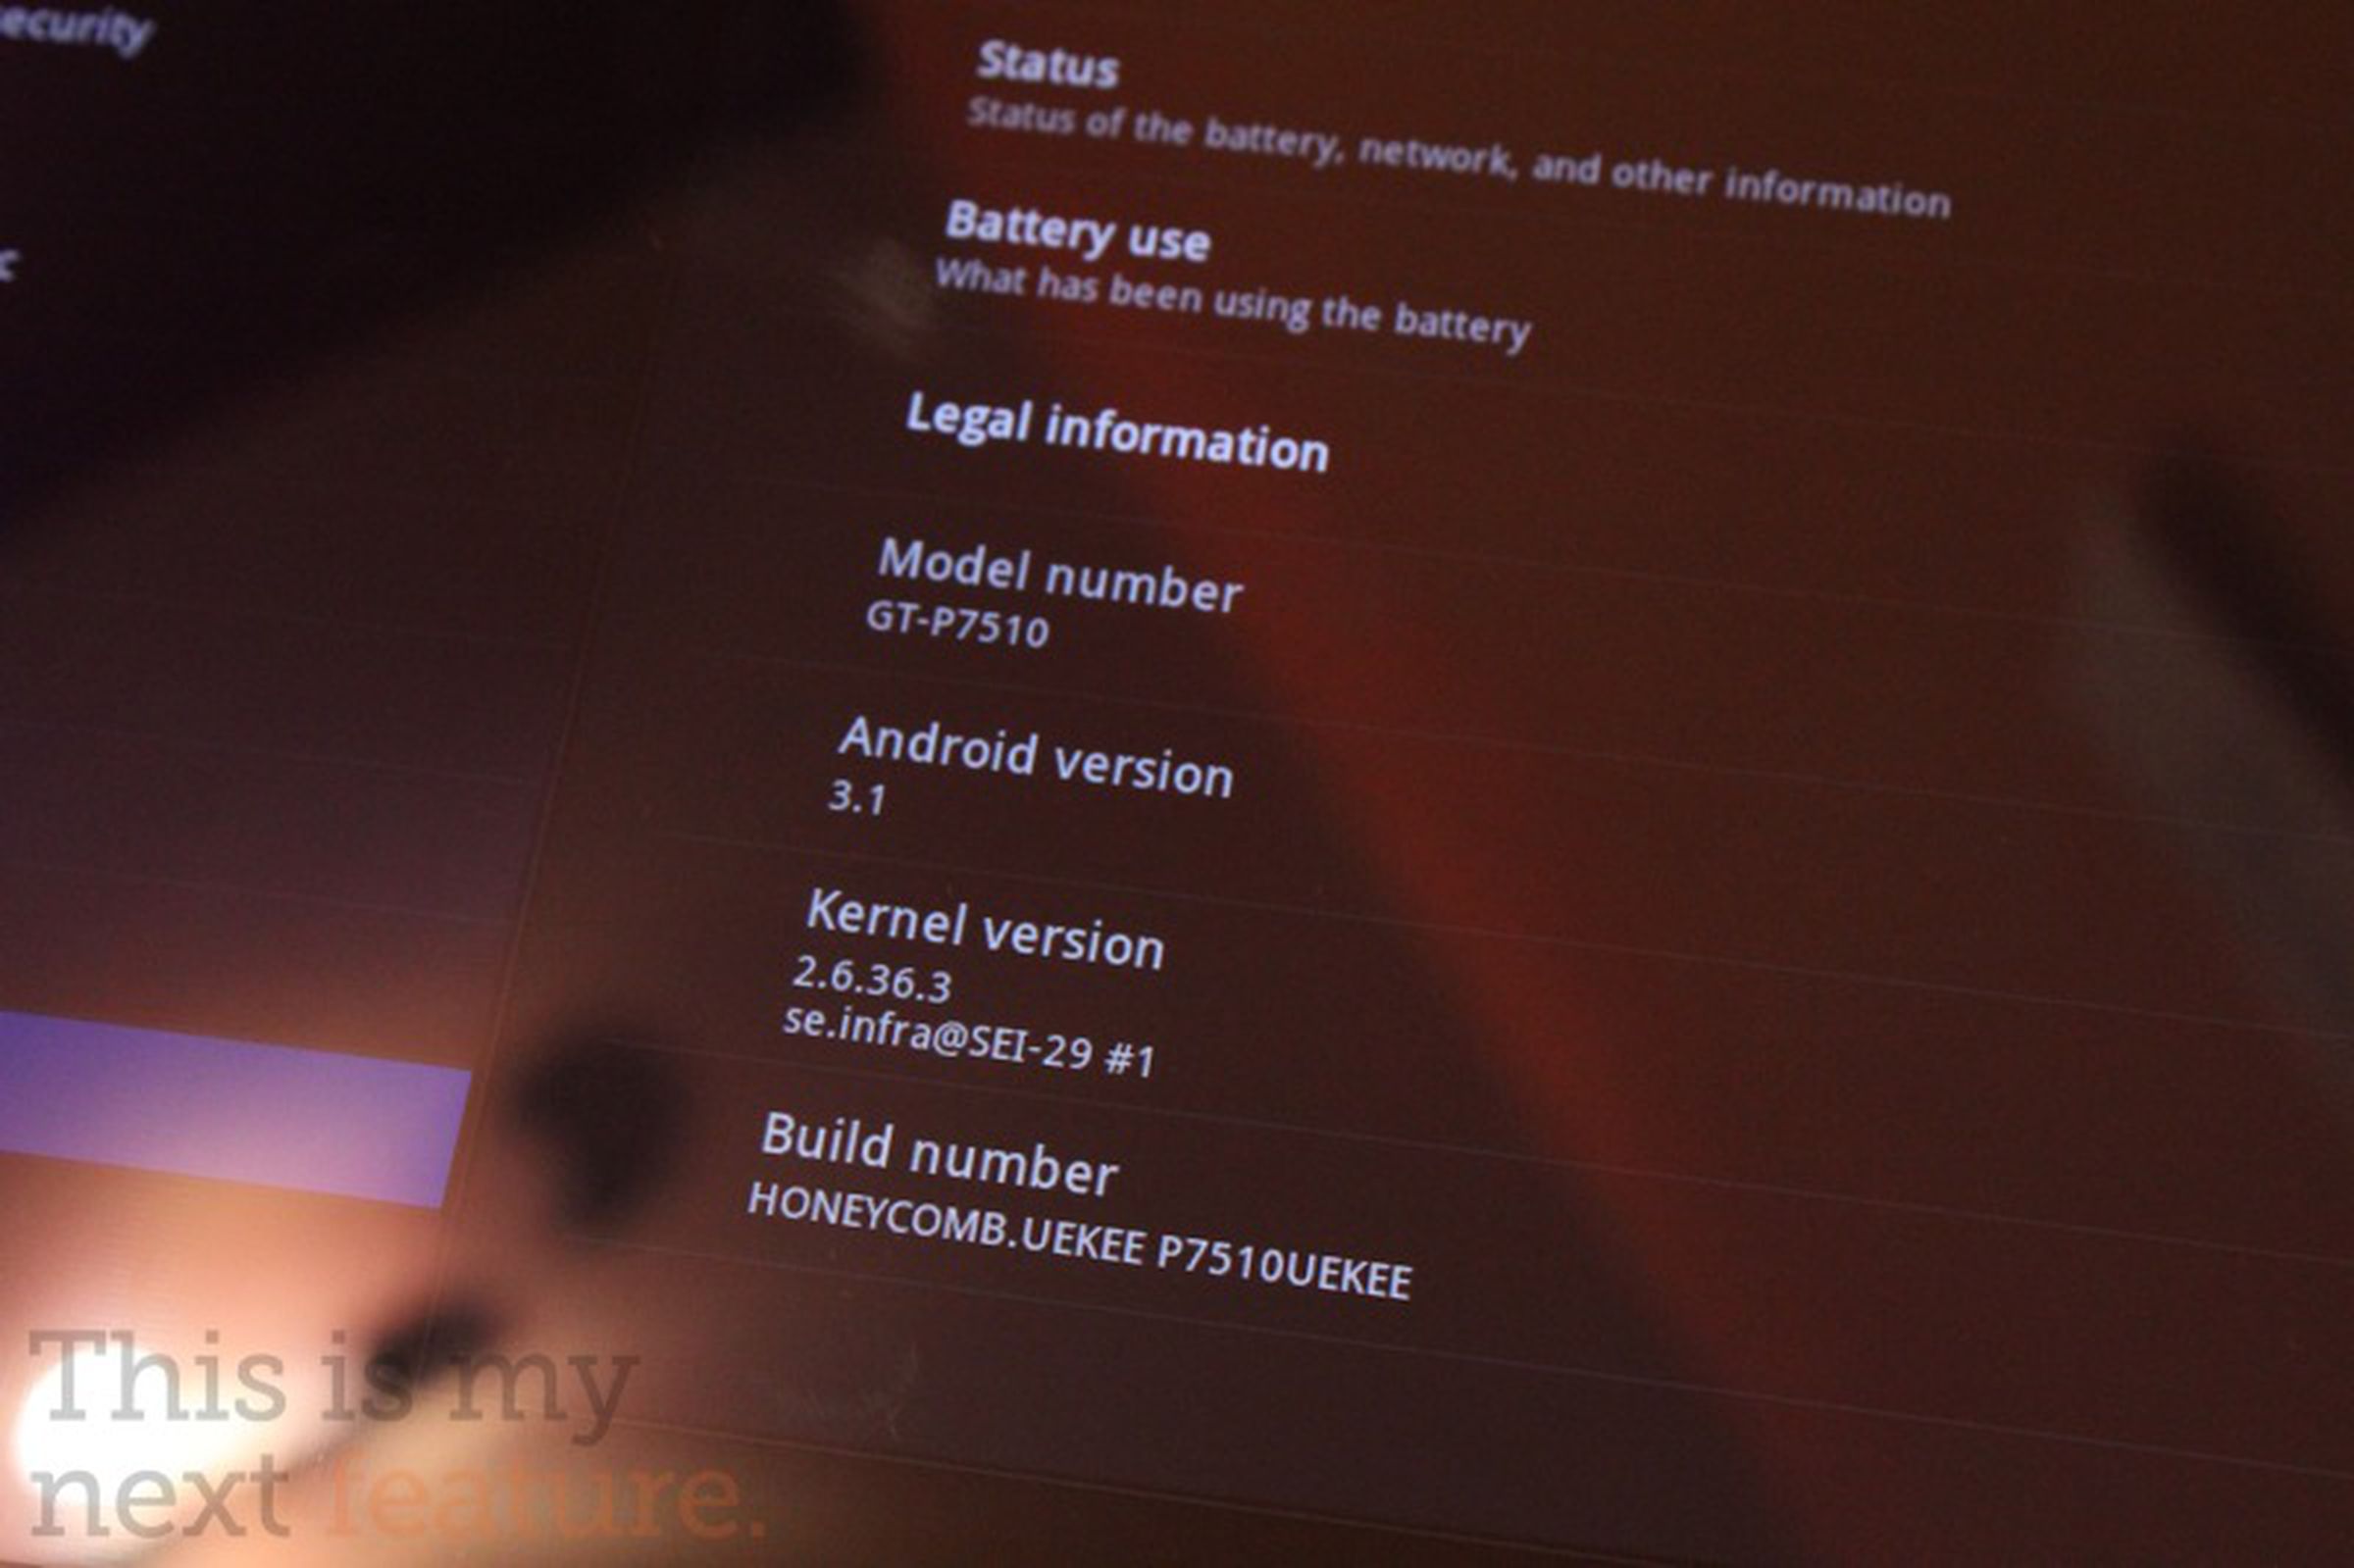 Galaxy Tab 10.1 running Android 3.1